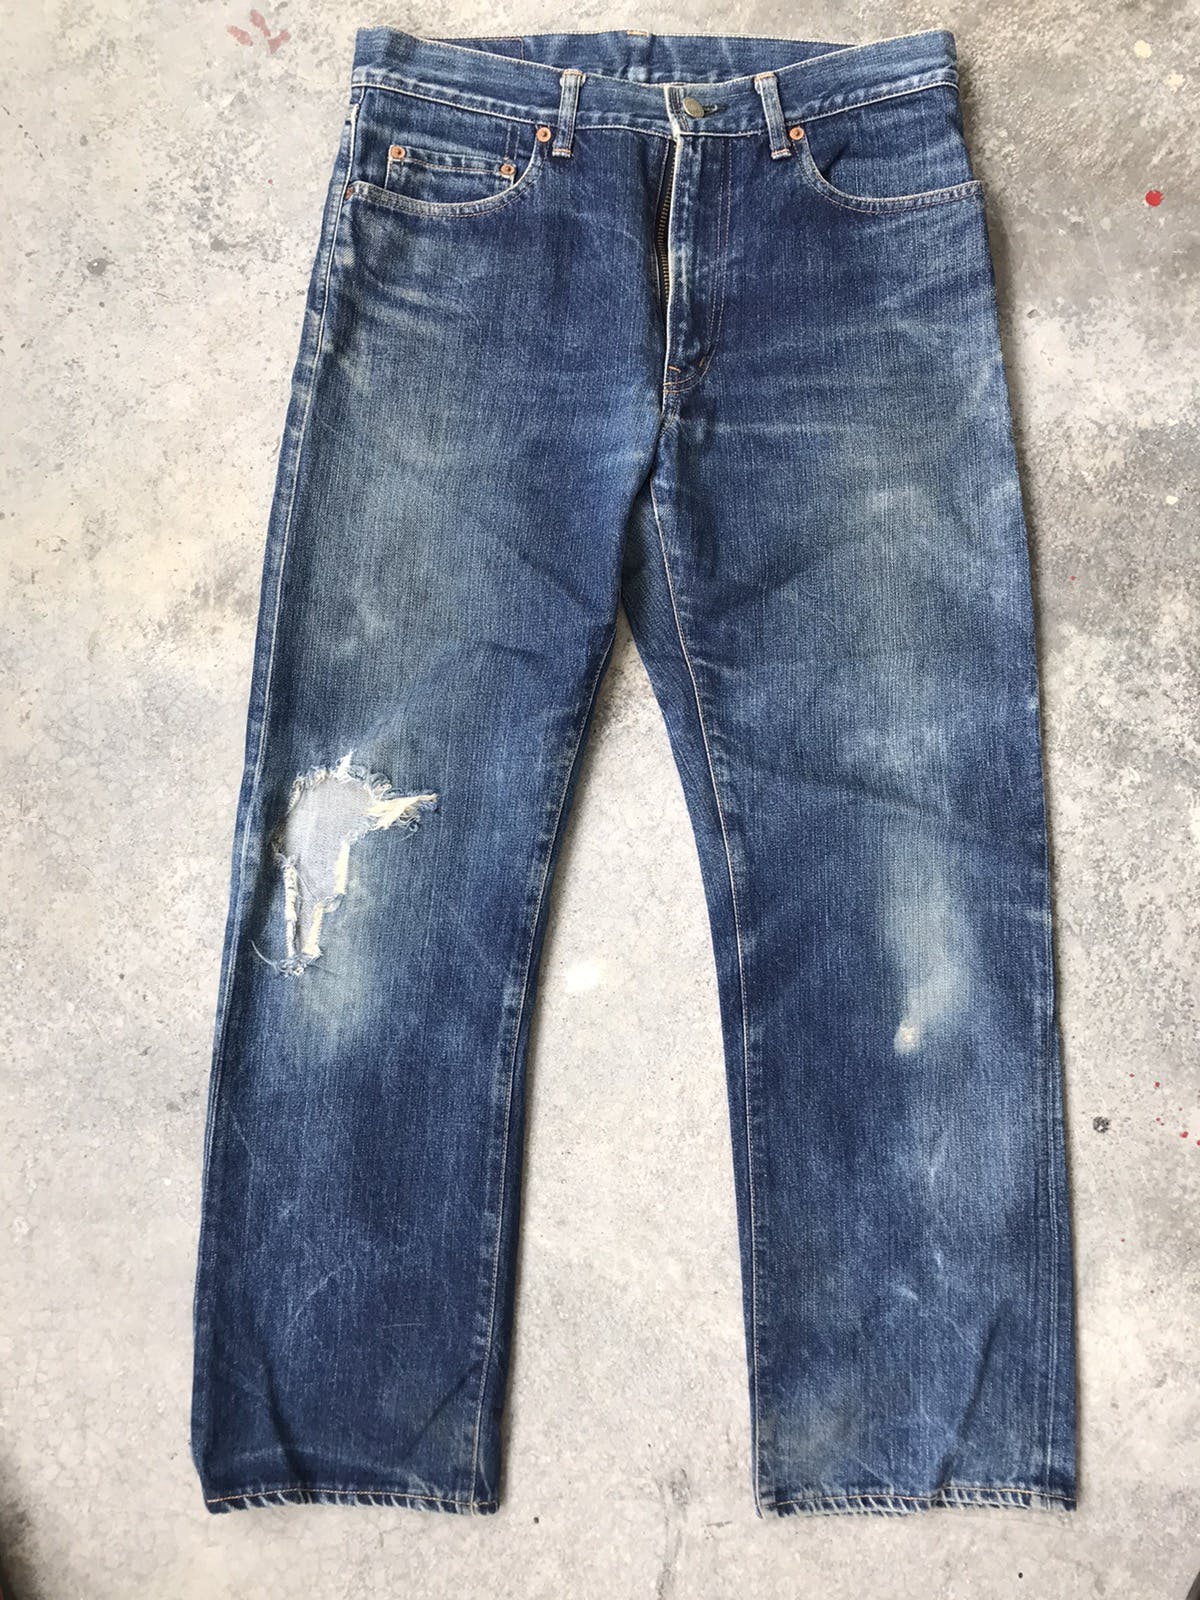 90s Hollywood Ranch Marrket Denim Jeans - 12